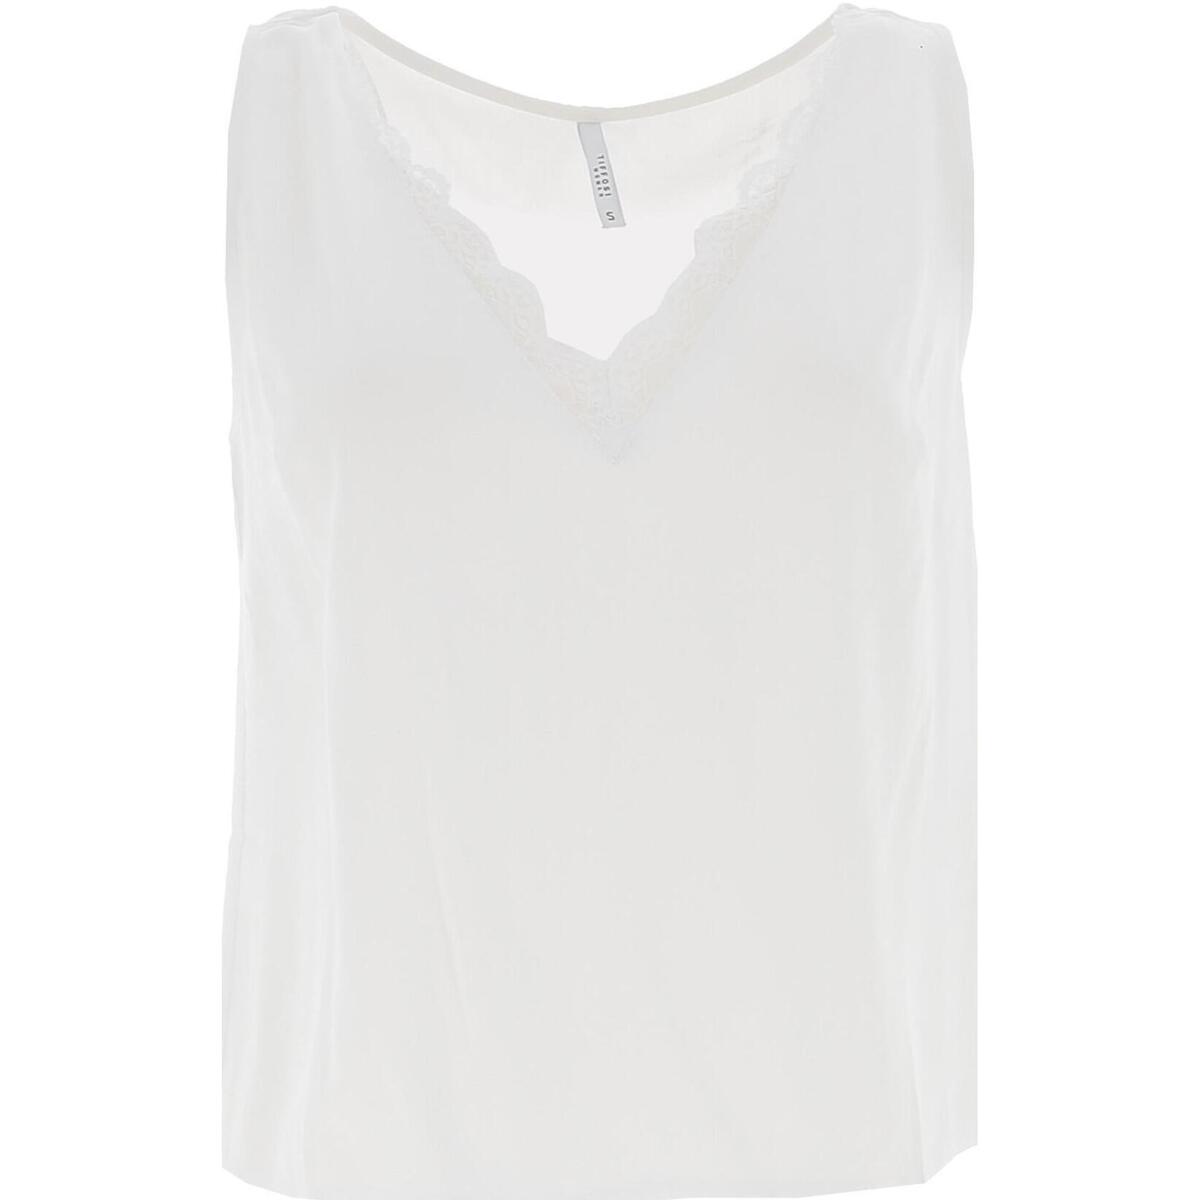 Vêtements Femme Débardeurs / T-shirts sans manche Tiffosi Cosmopolitan blanc top Blanc